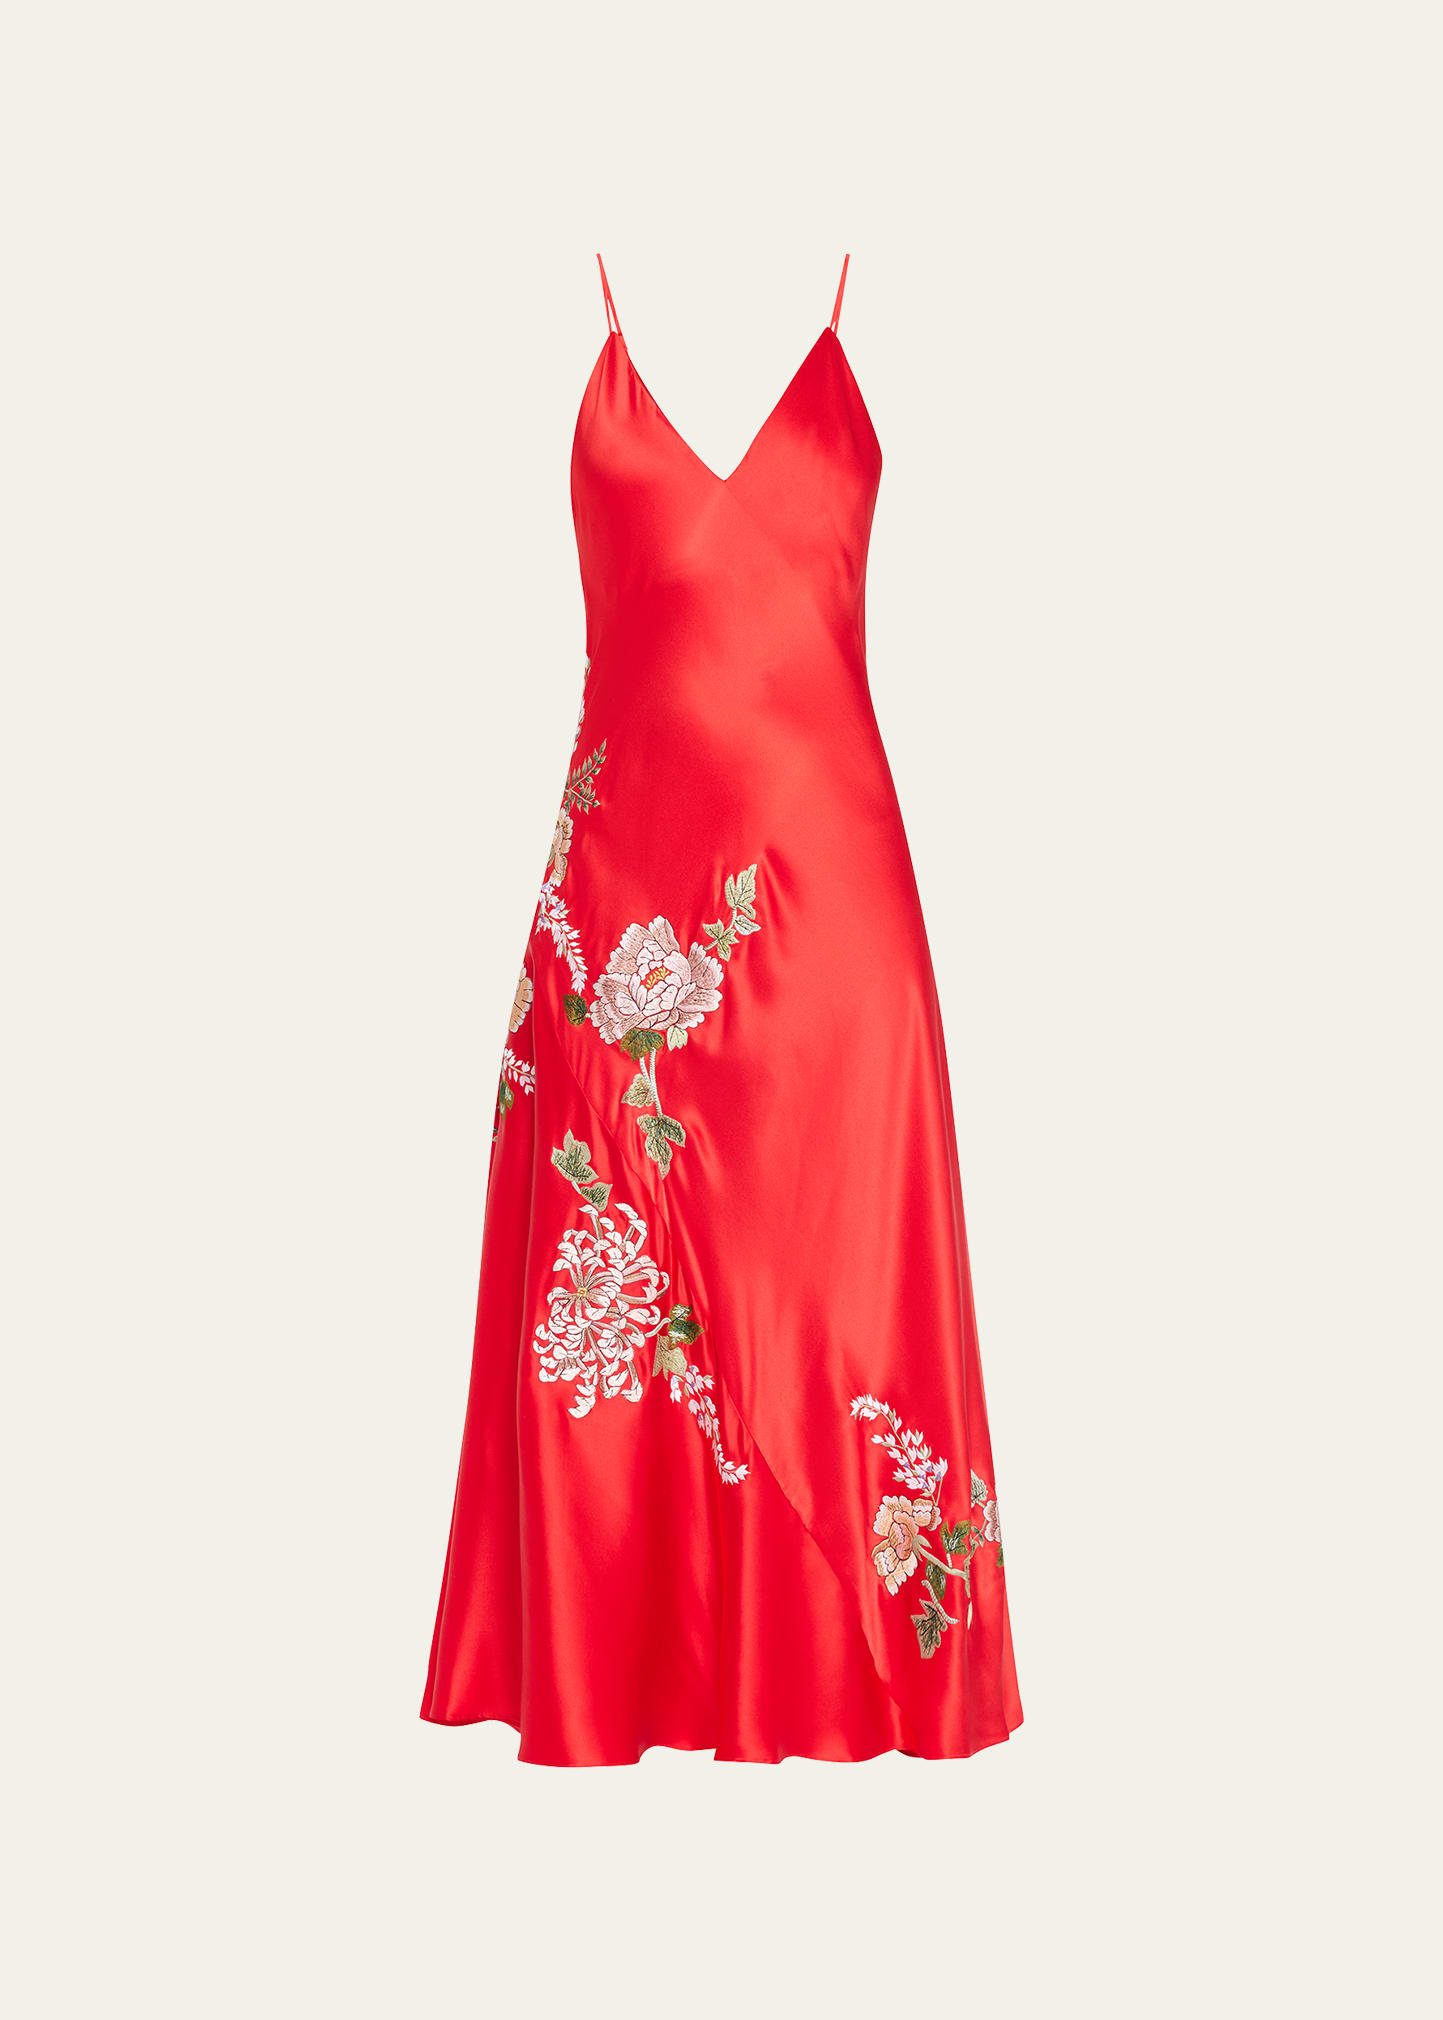 Josie Natori Kairaku Floral-Embroidered Silk Gown